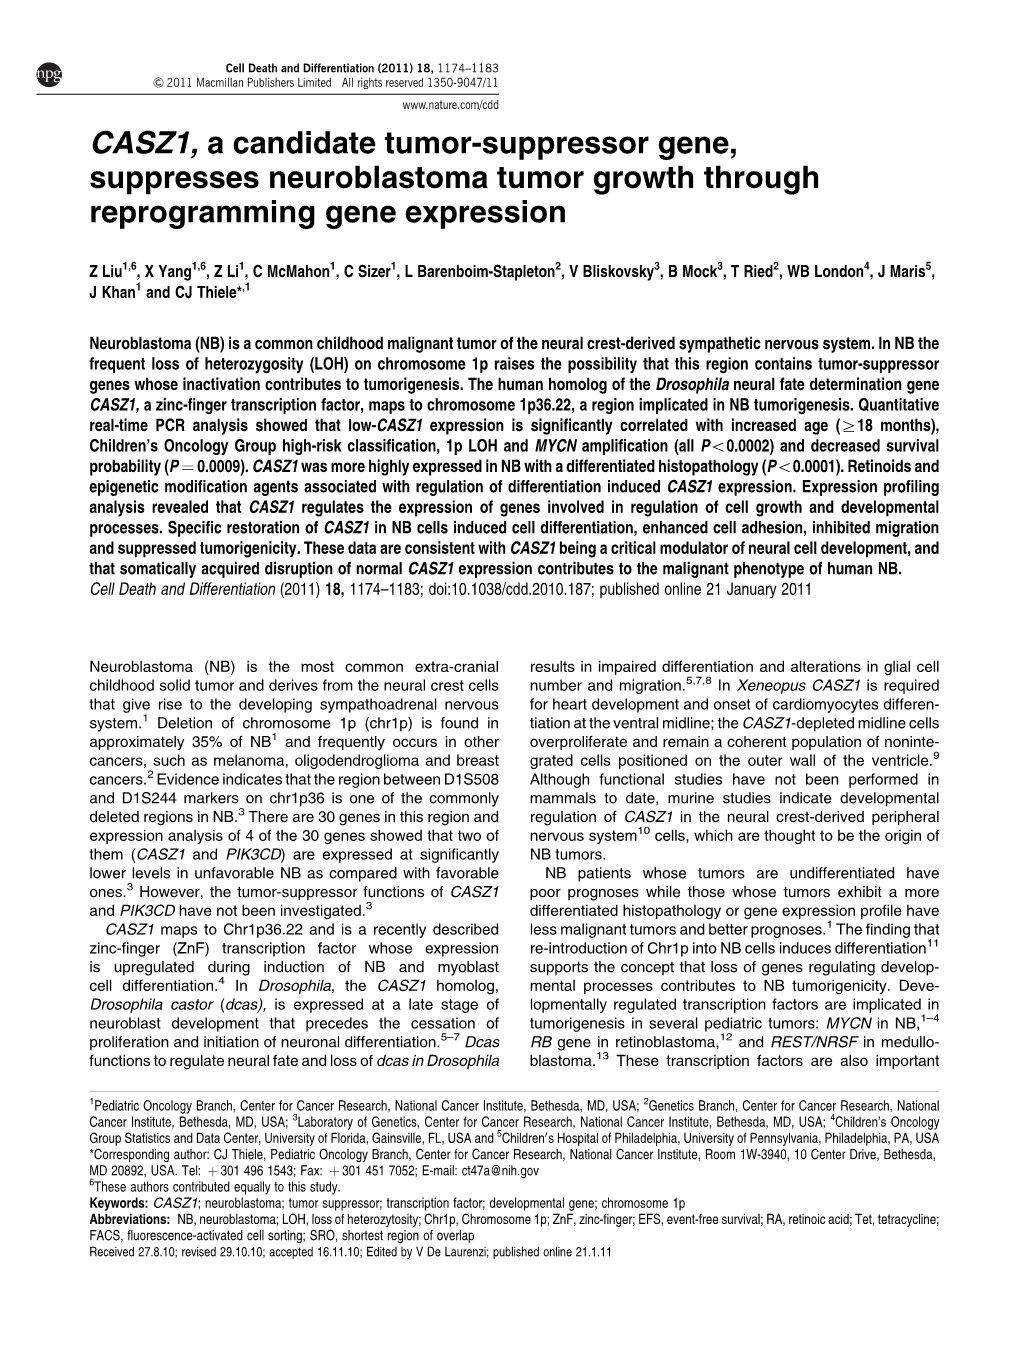 CASZ1, a Candidate Tumor-Suppressor Gene, Suppresses Neuroblastoma Tumor Growth Through Reprogramming Gene Expression